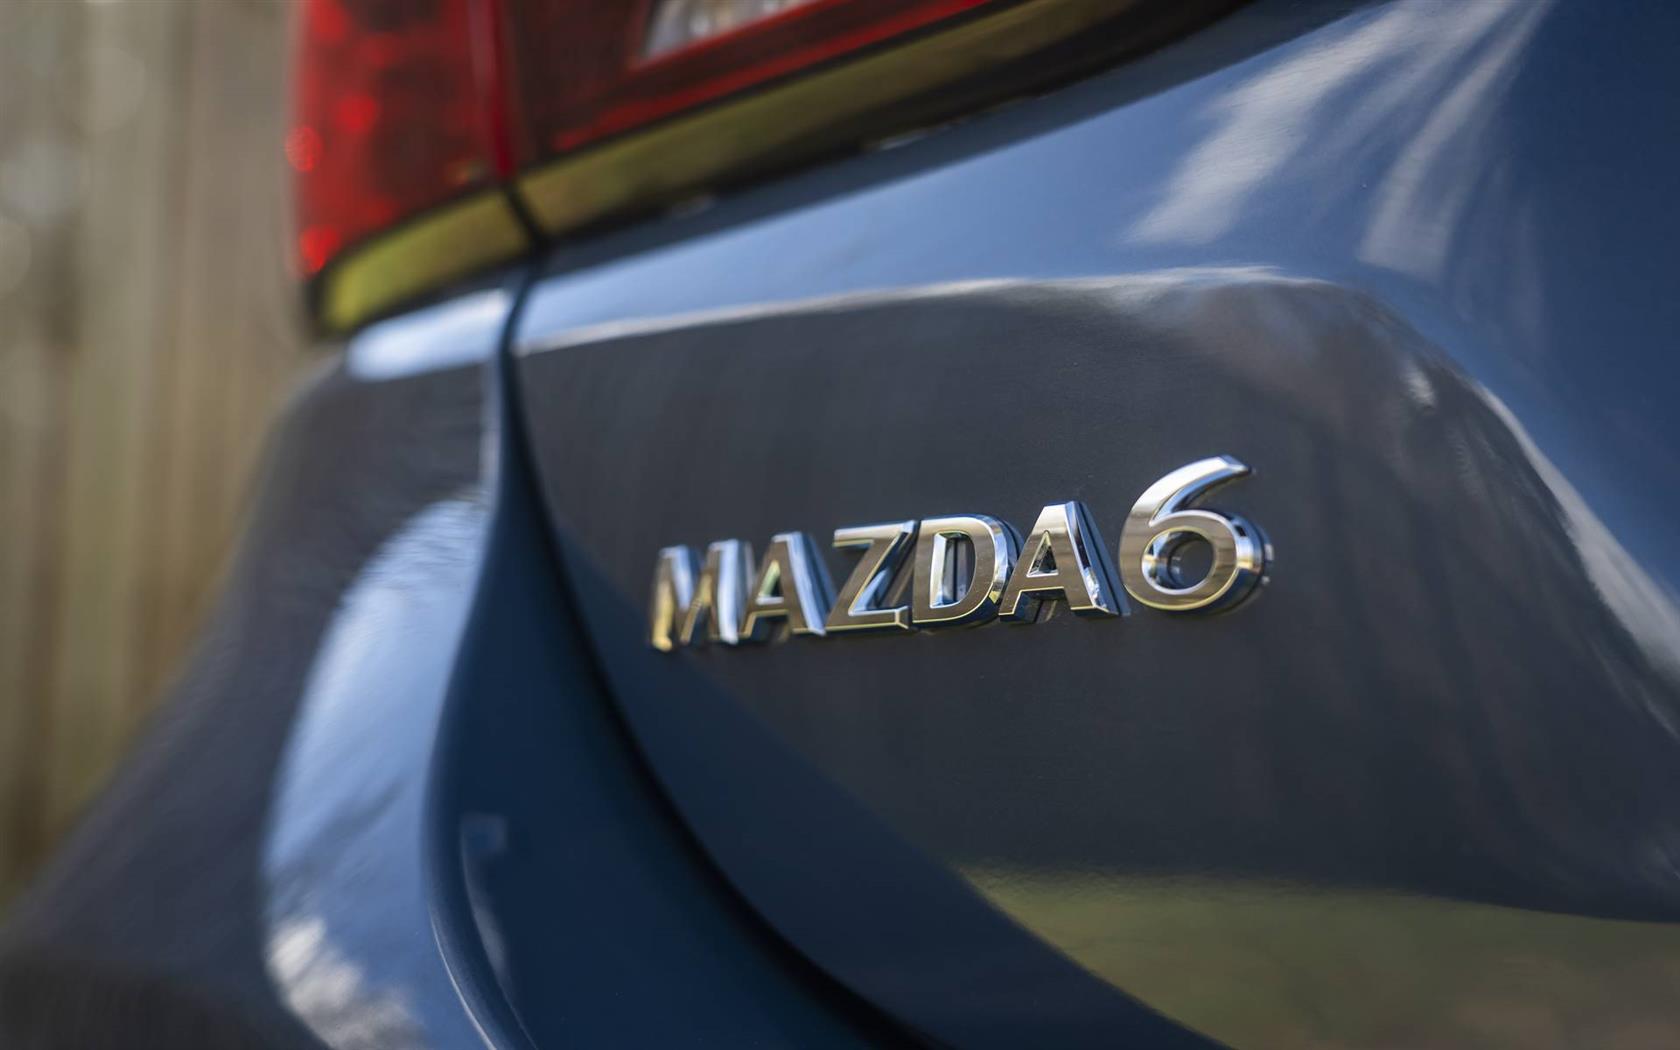 2021 Mazda 6 Kuro Edition